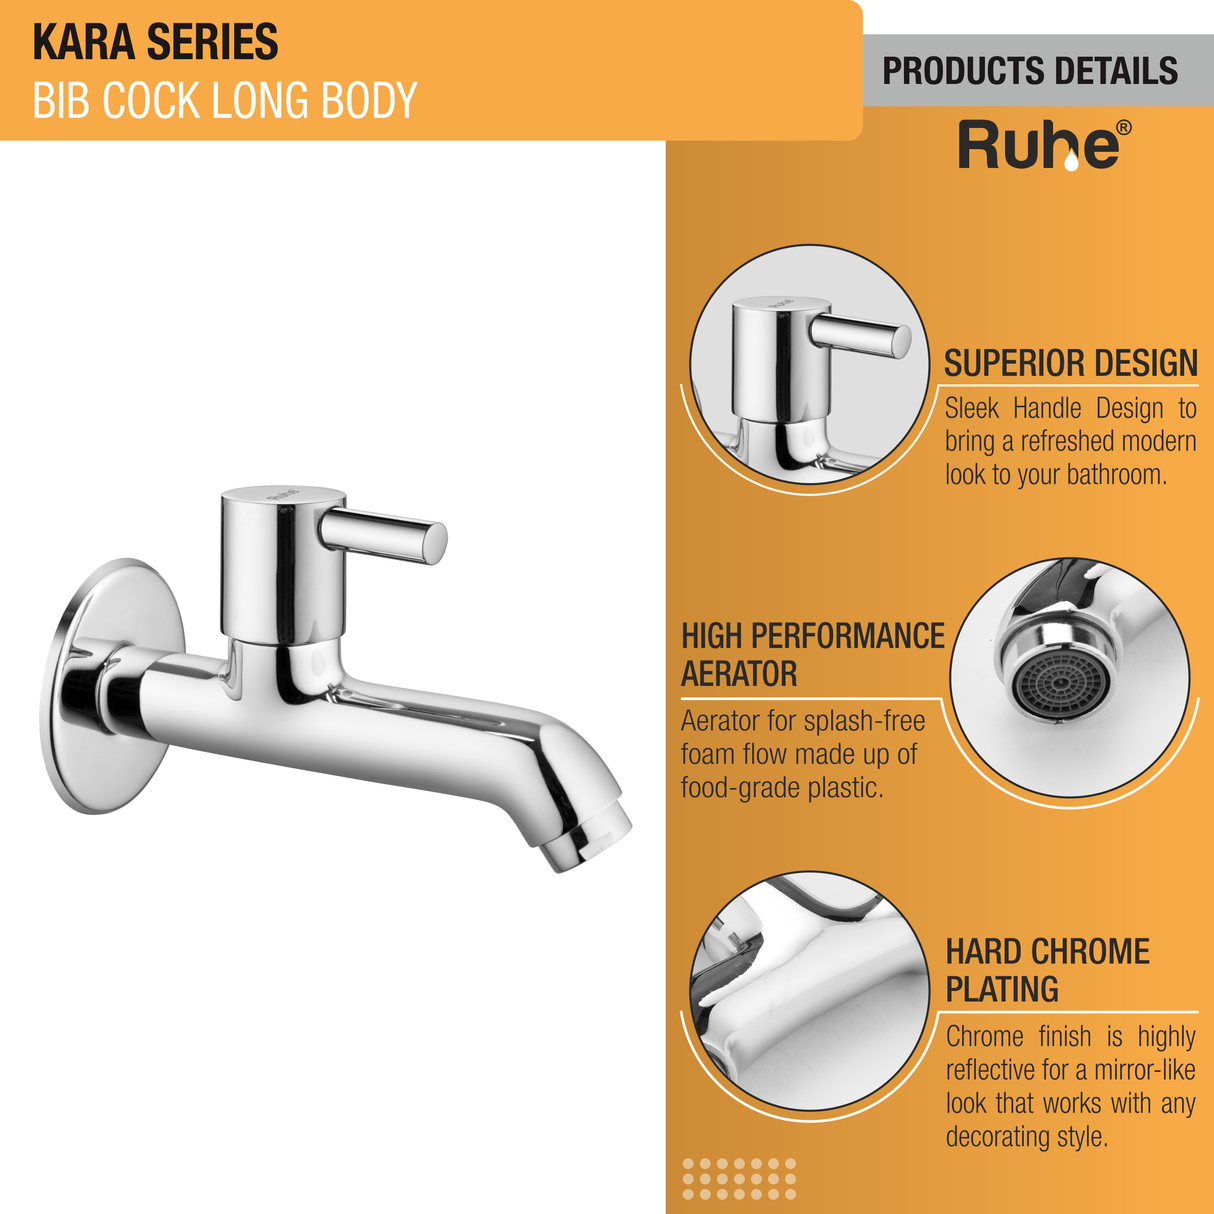 Kara Bib Tap Long Body Brass Faucet product details